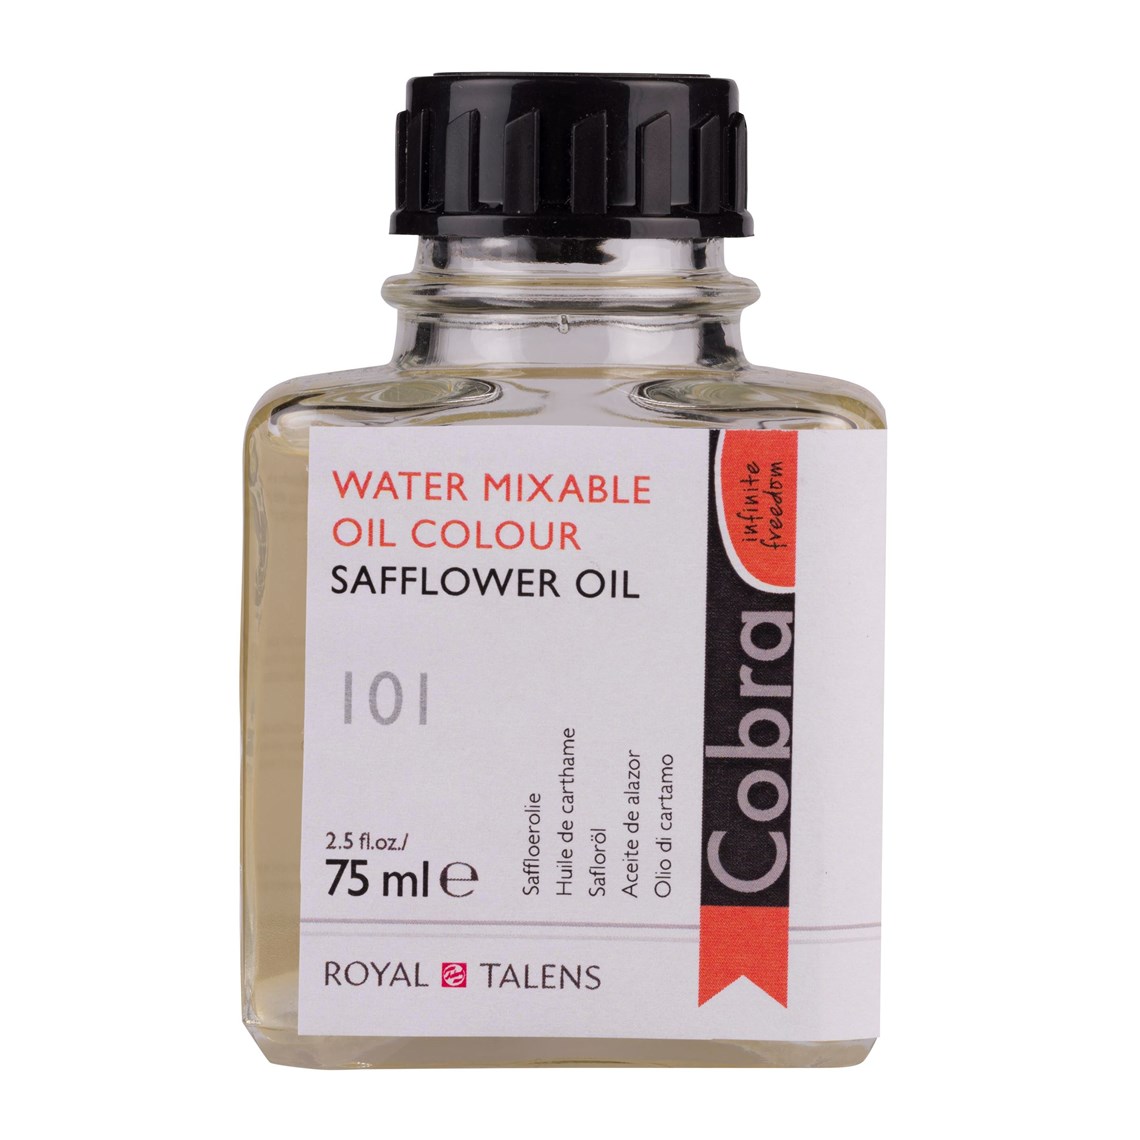 Cobra Safflower Oil 75ml 101